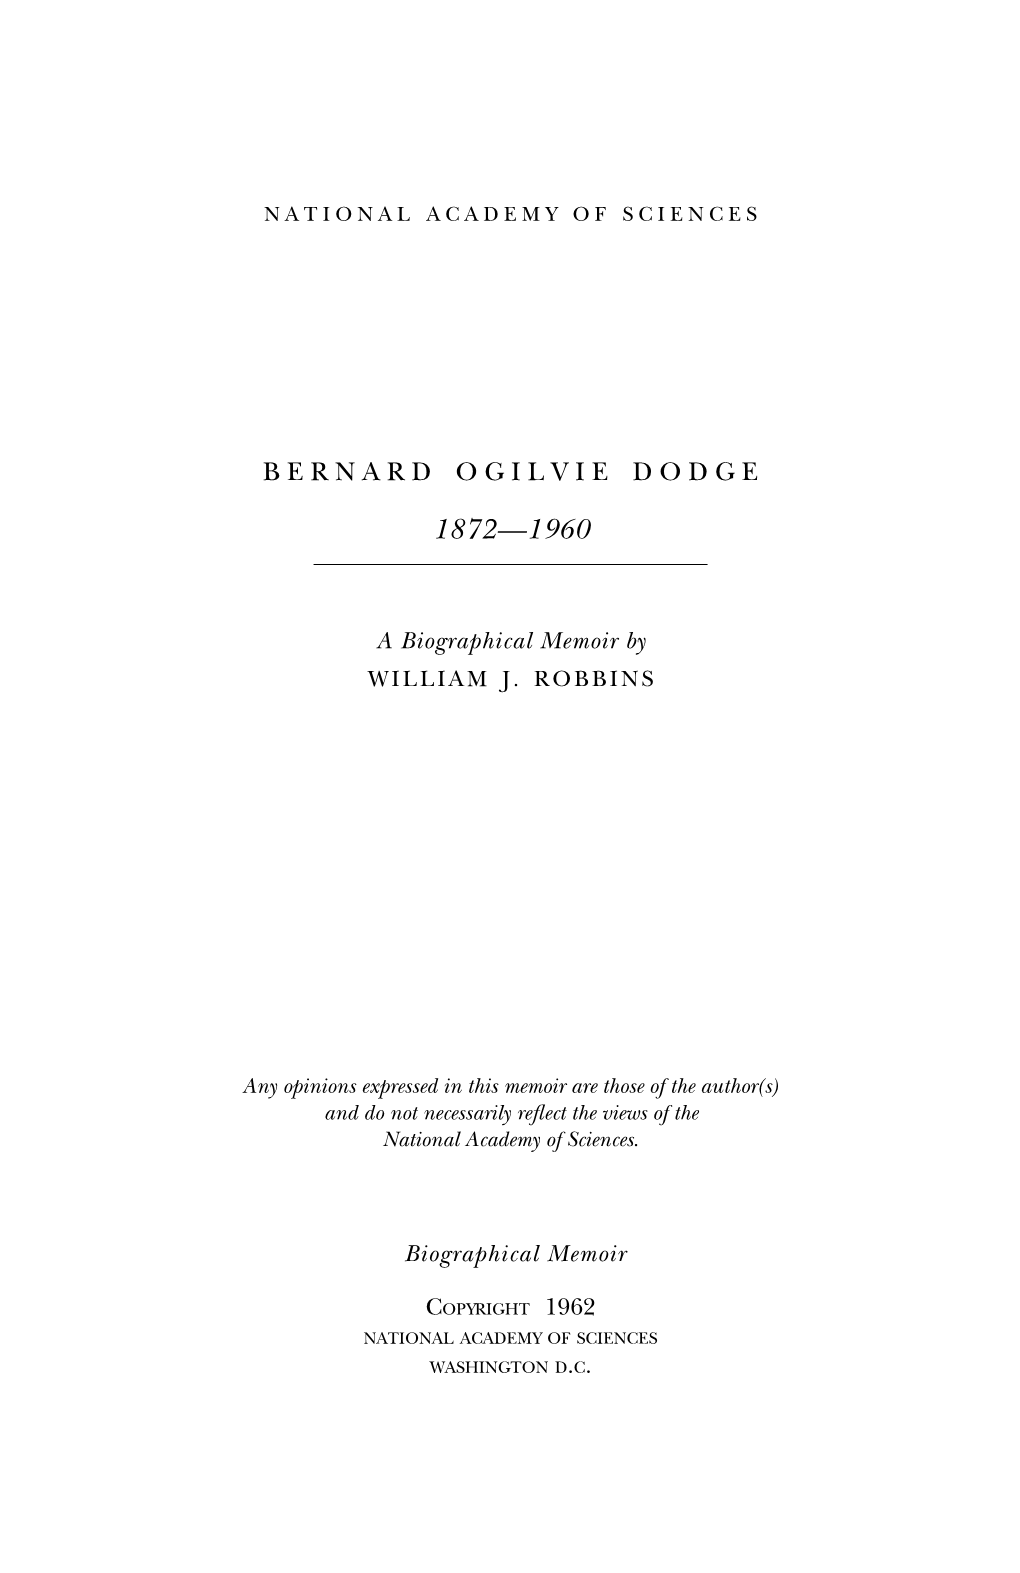 Bernard Ogilvie Dodge